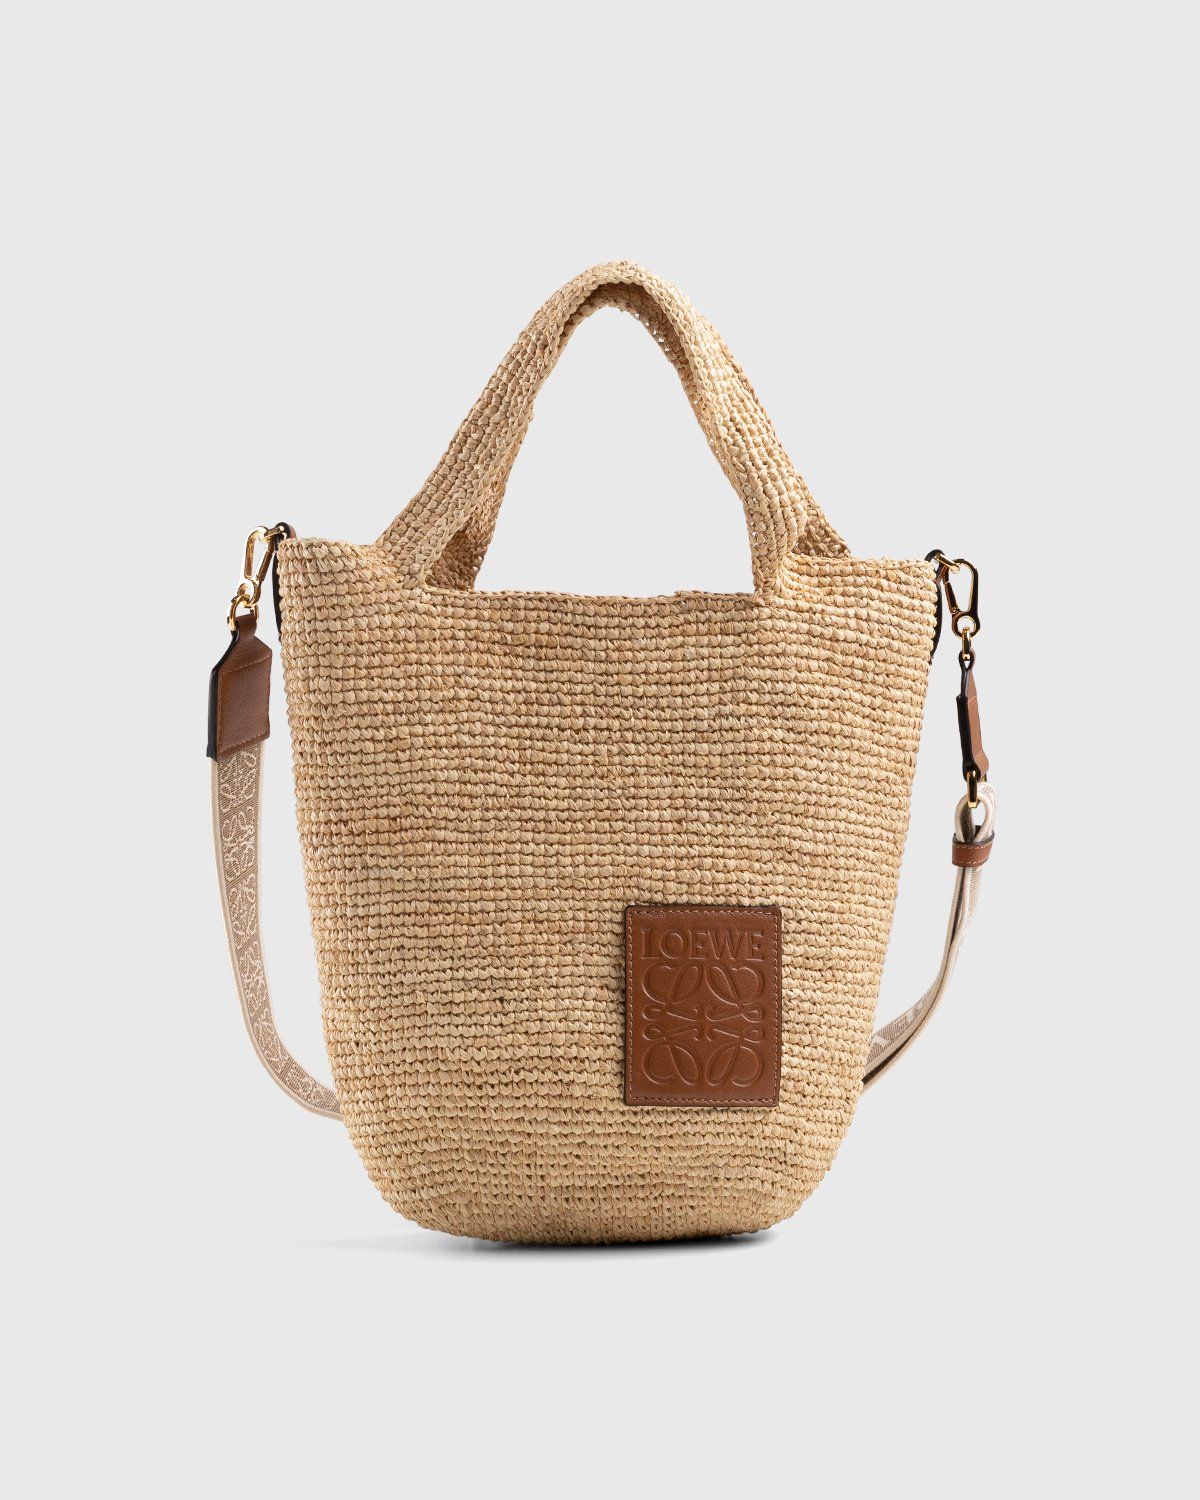 Loewe – Paula's Ibiza Mini Slit Bag Natural/Tan | Highsnobiety Shop